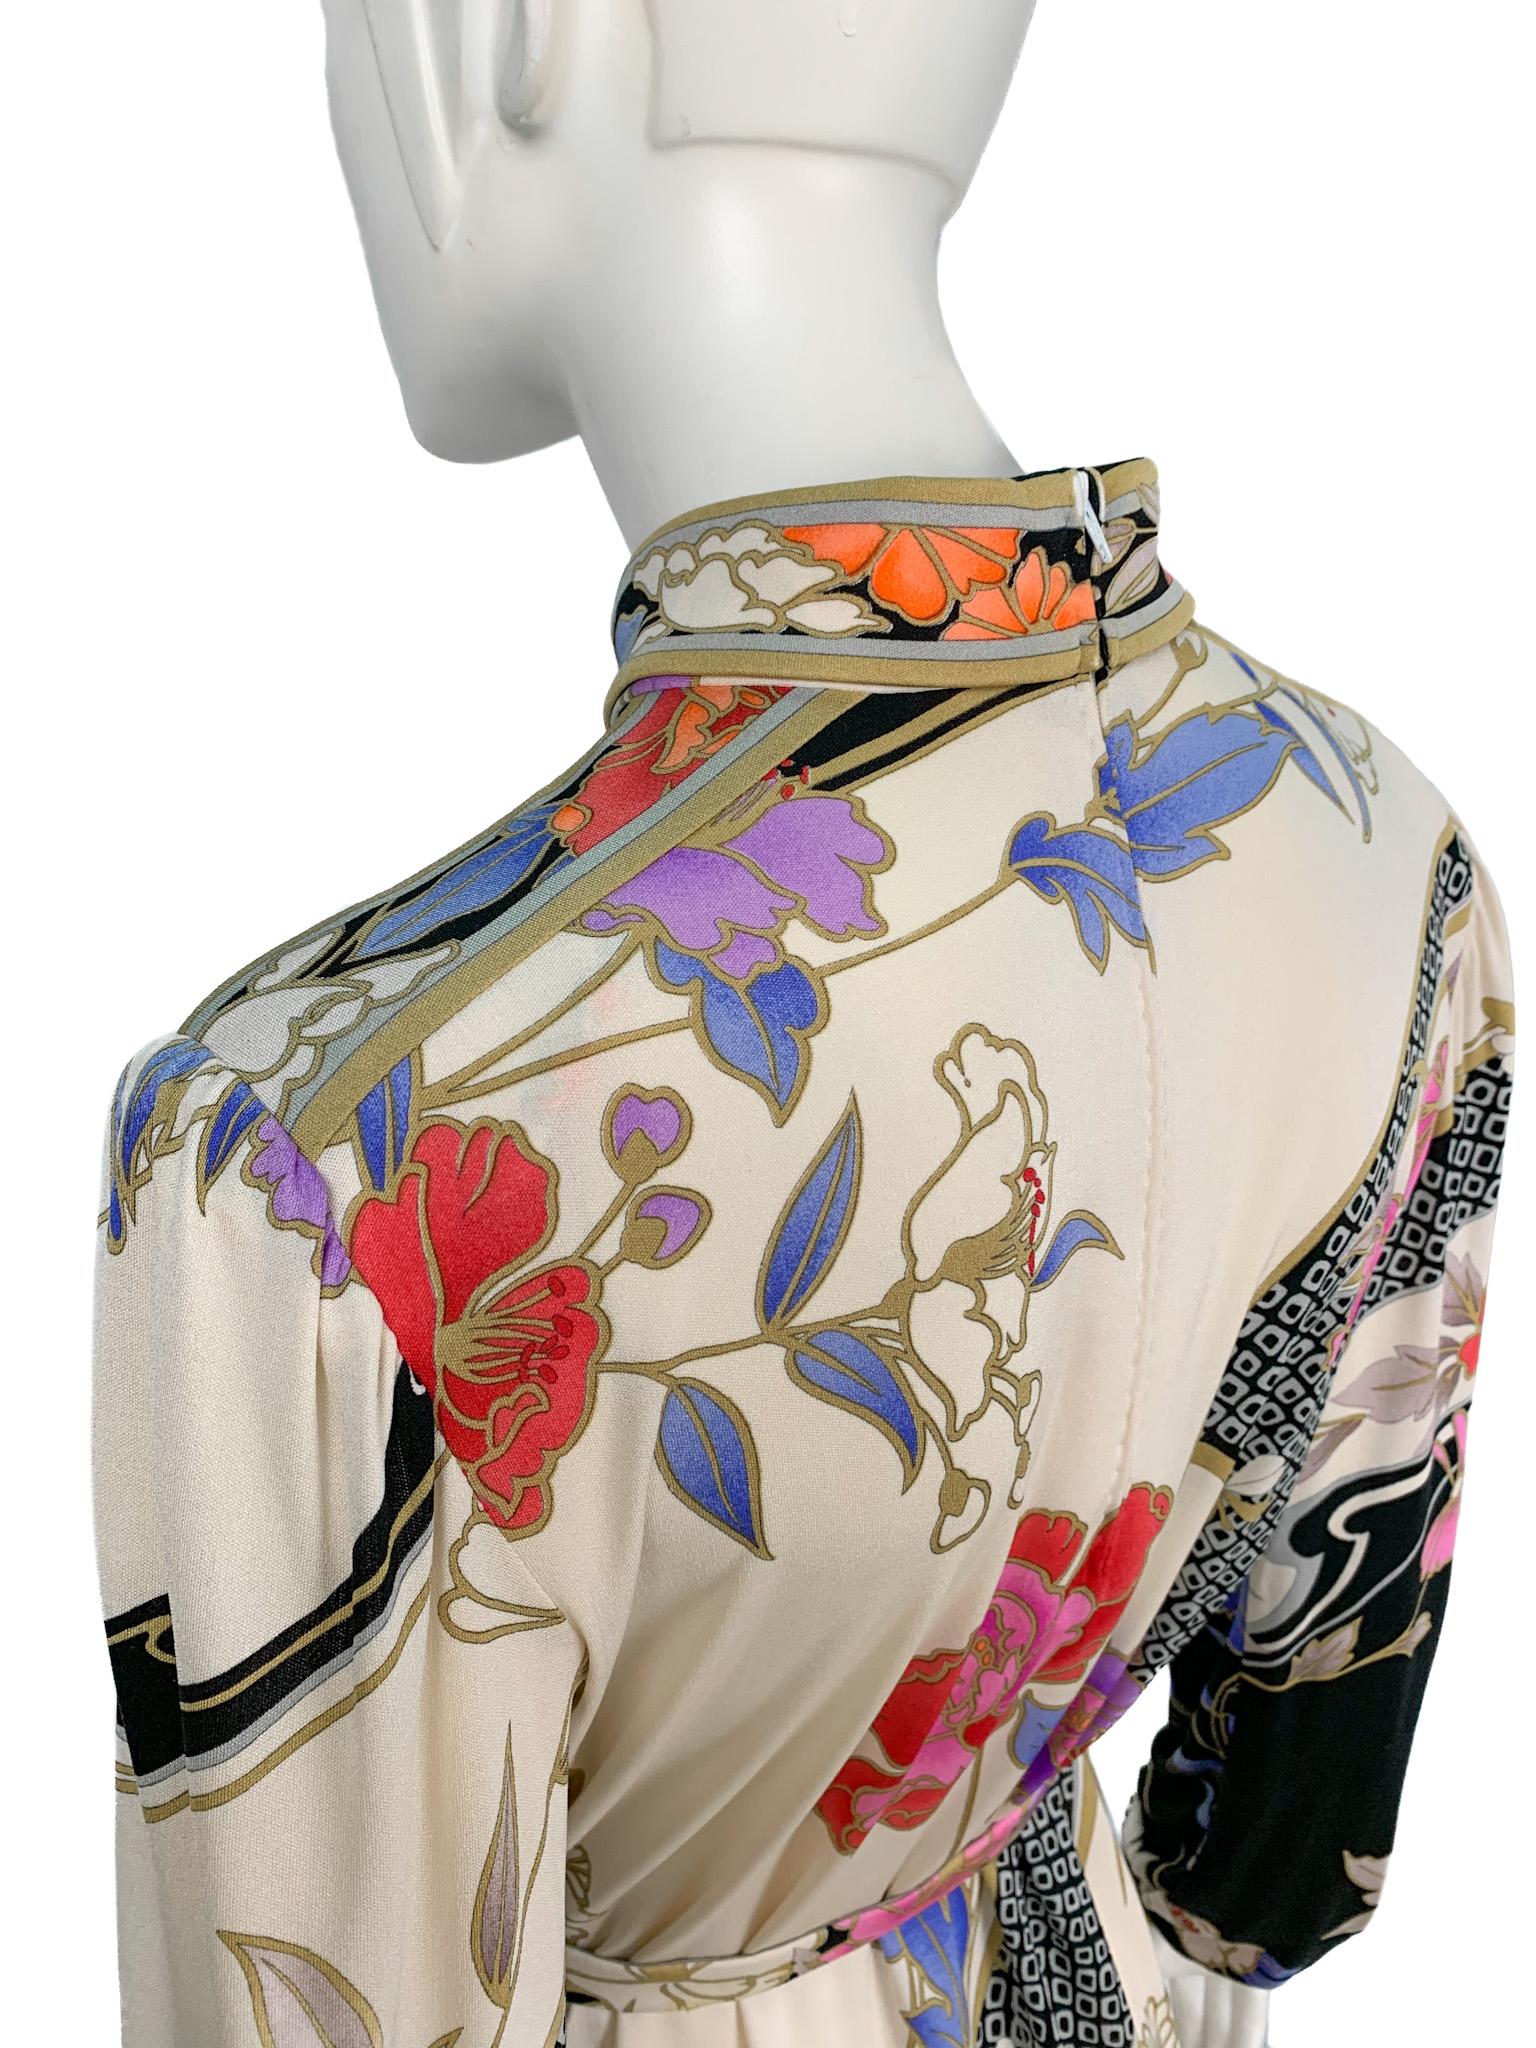 Leonard Paris printed dress in 100% mikado silk jersey. 4